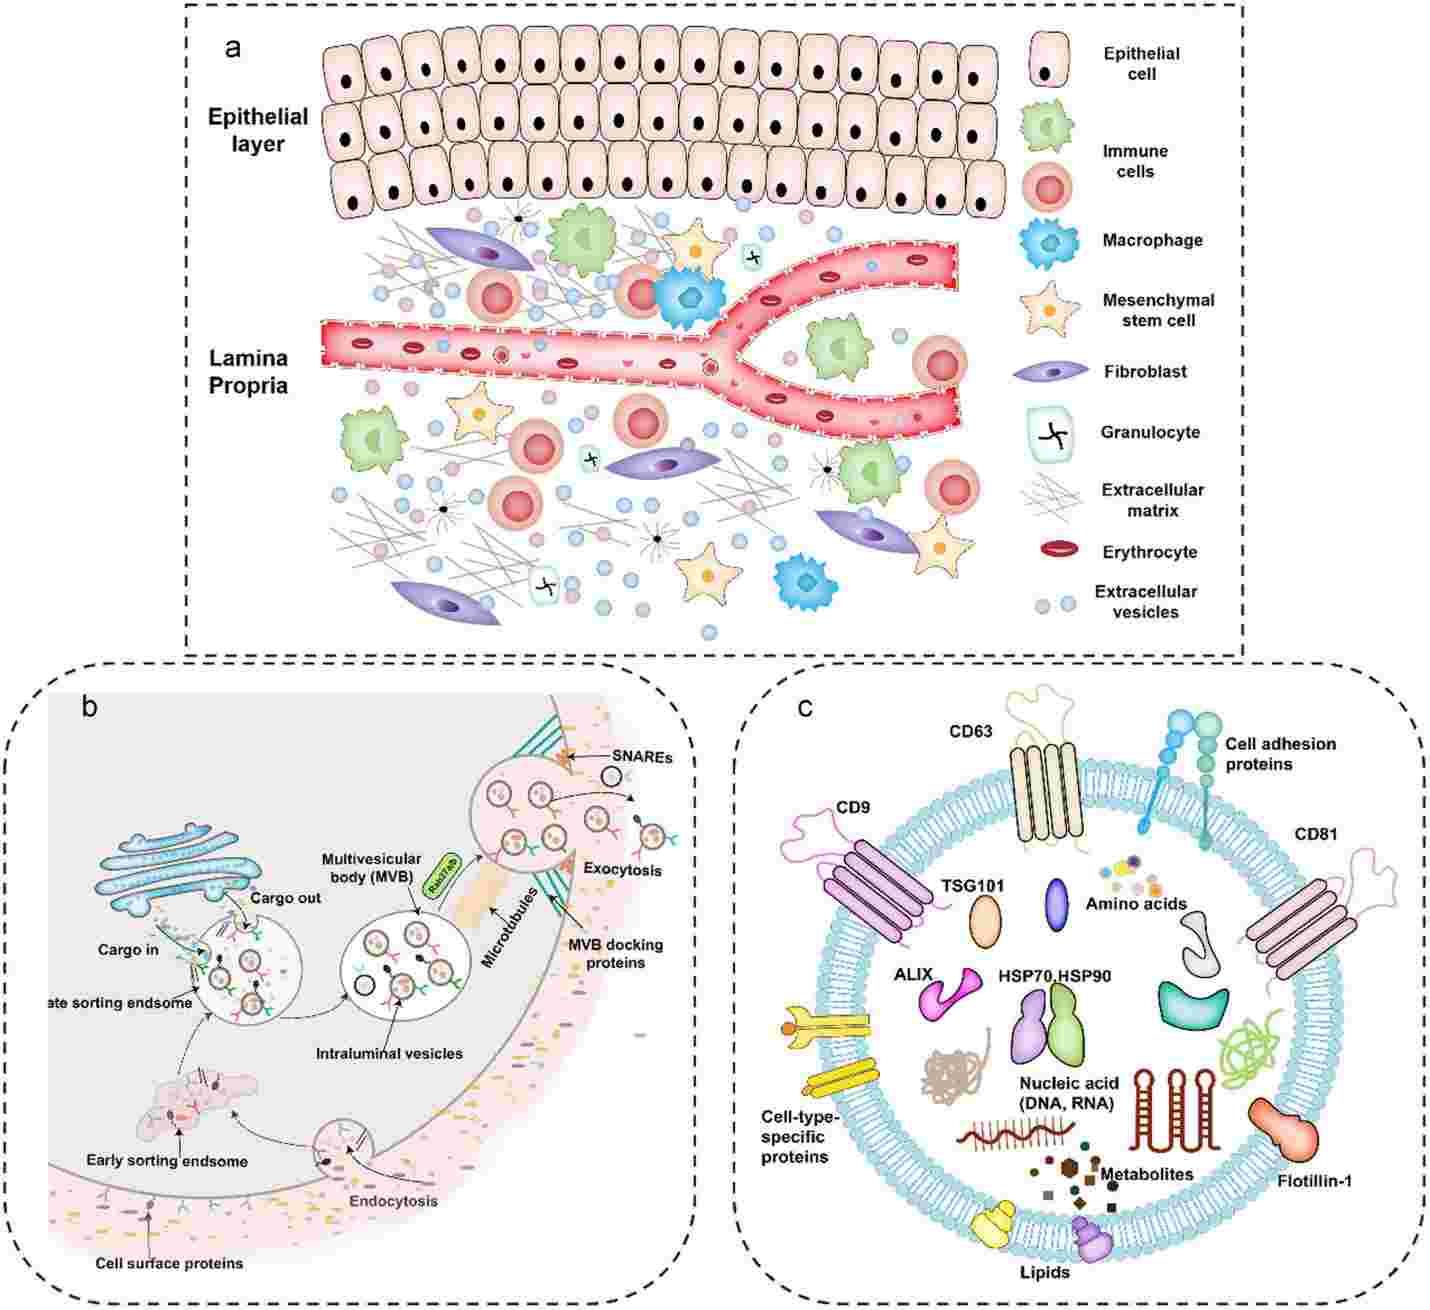 Biogenesis and identification of tissue-derived EVs (Ti-EVs).